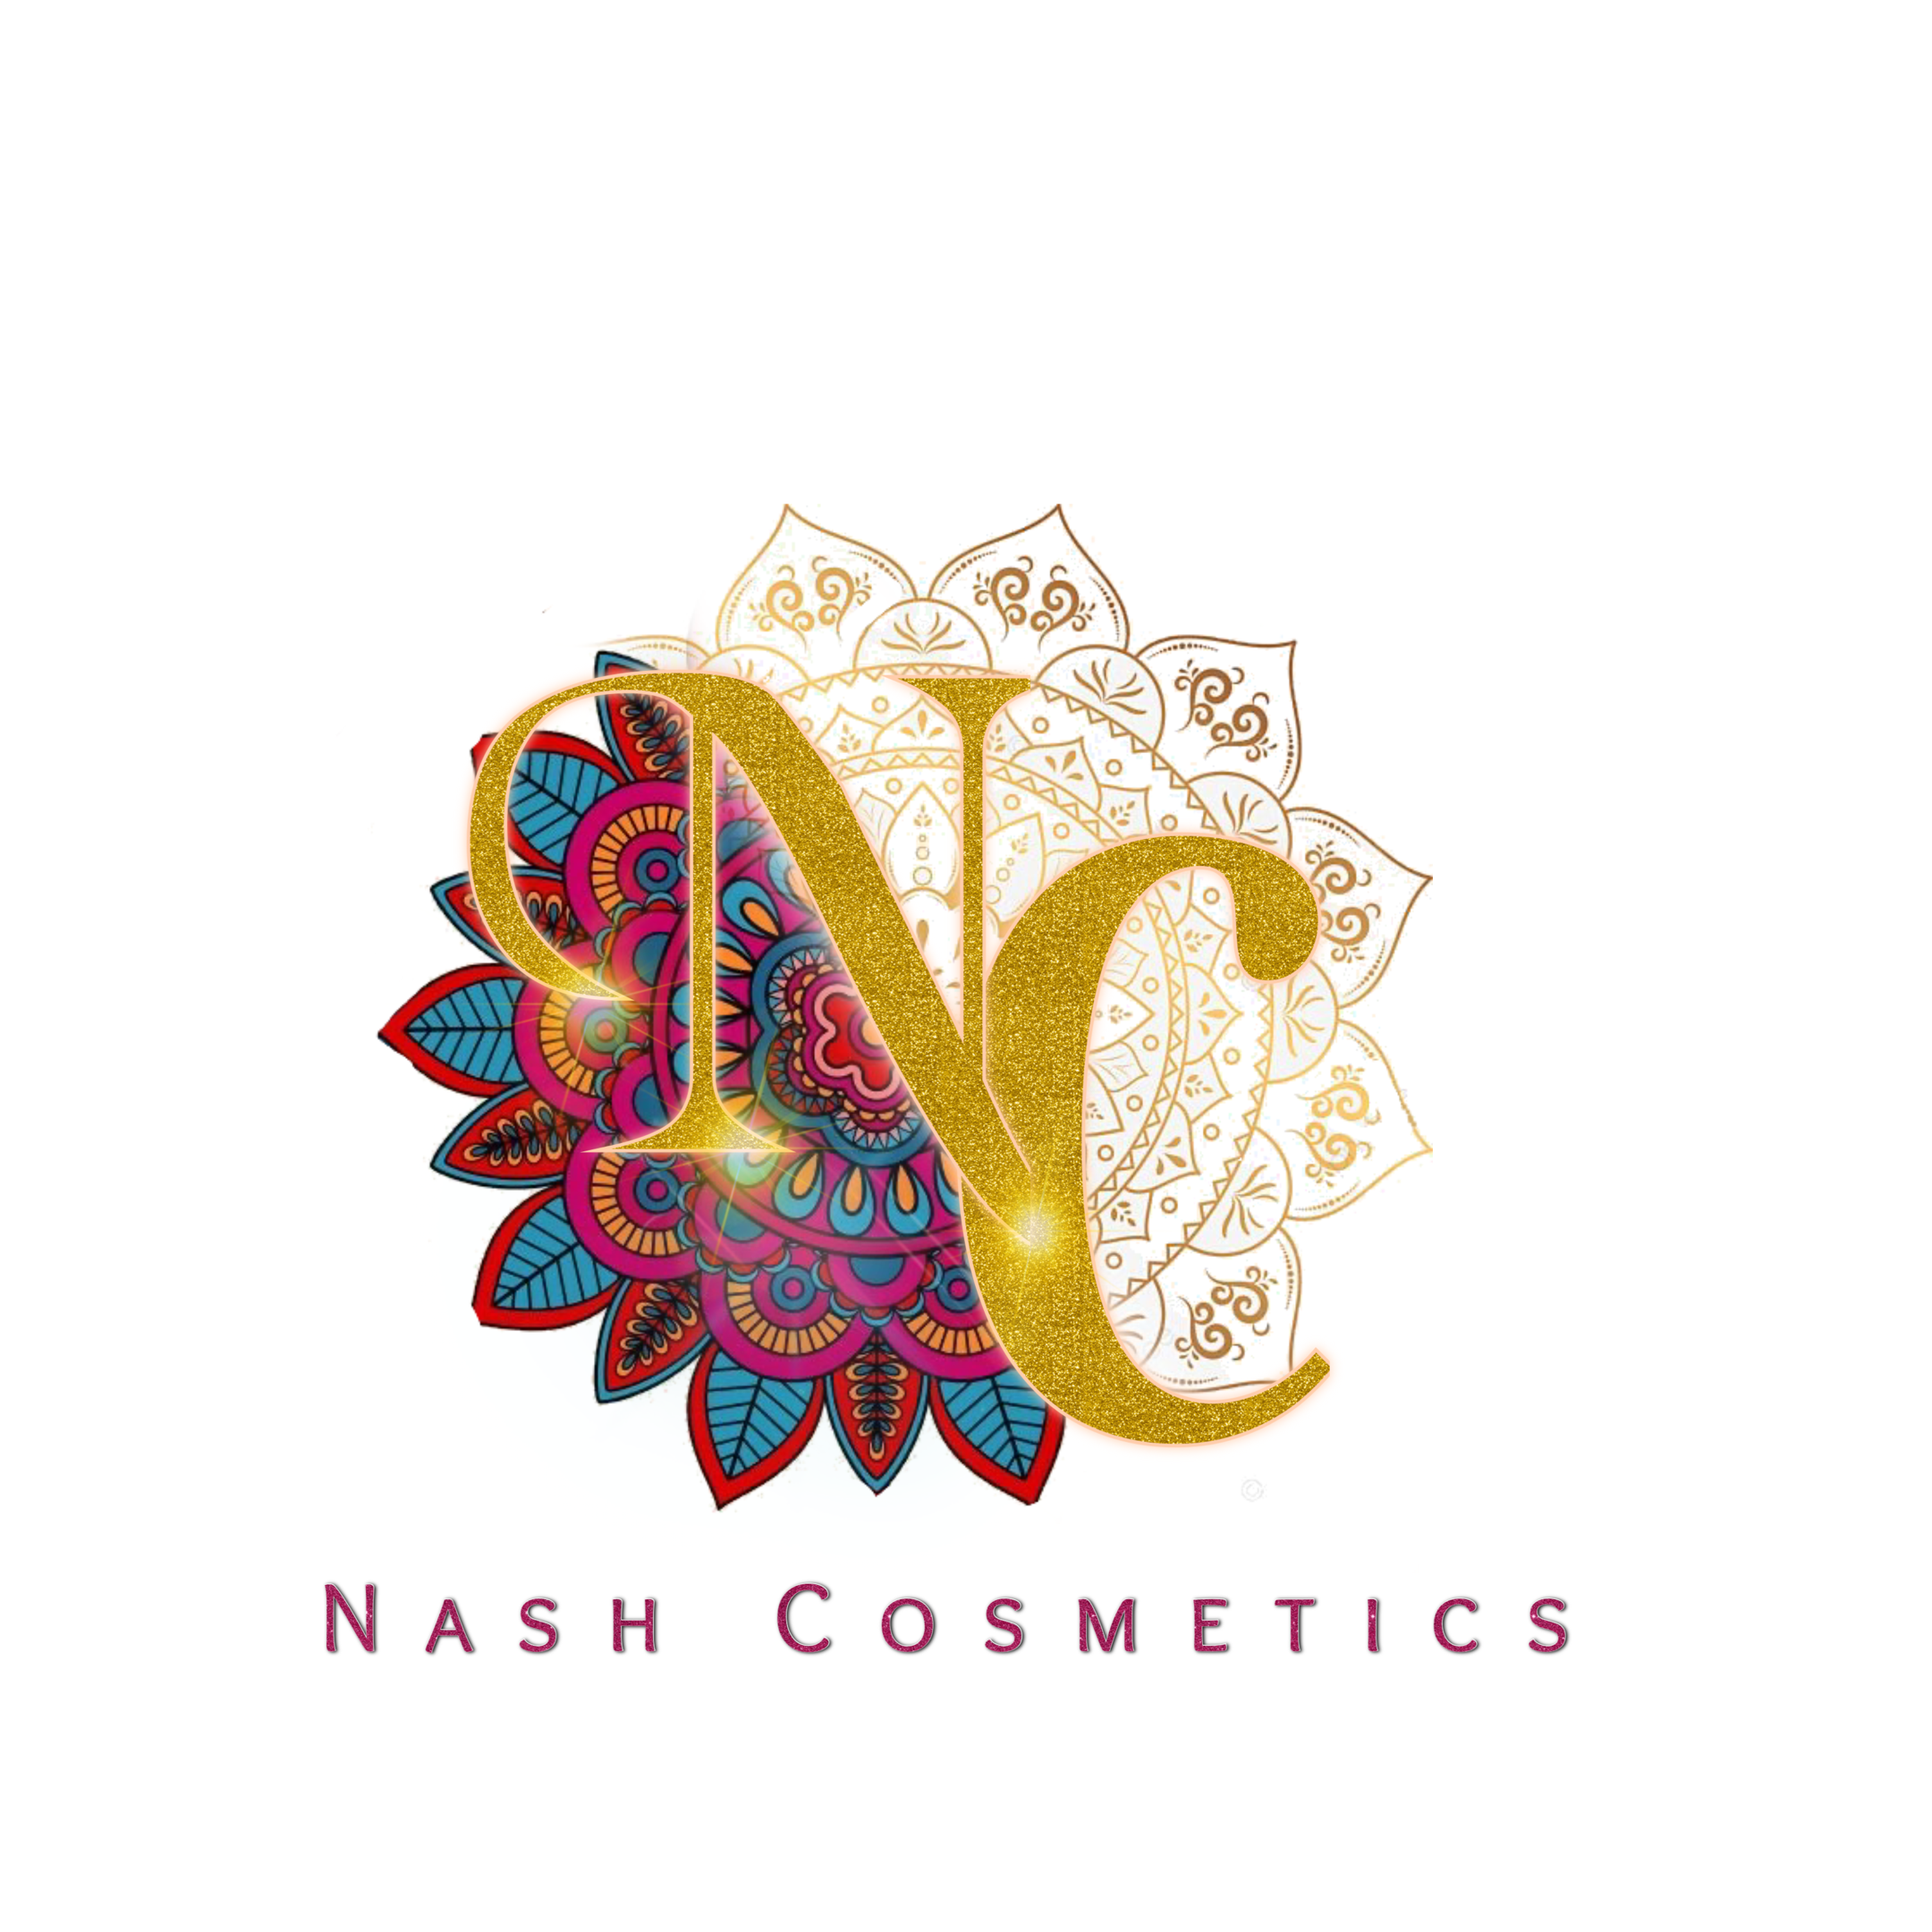 Nash Cosmetics